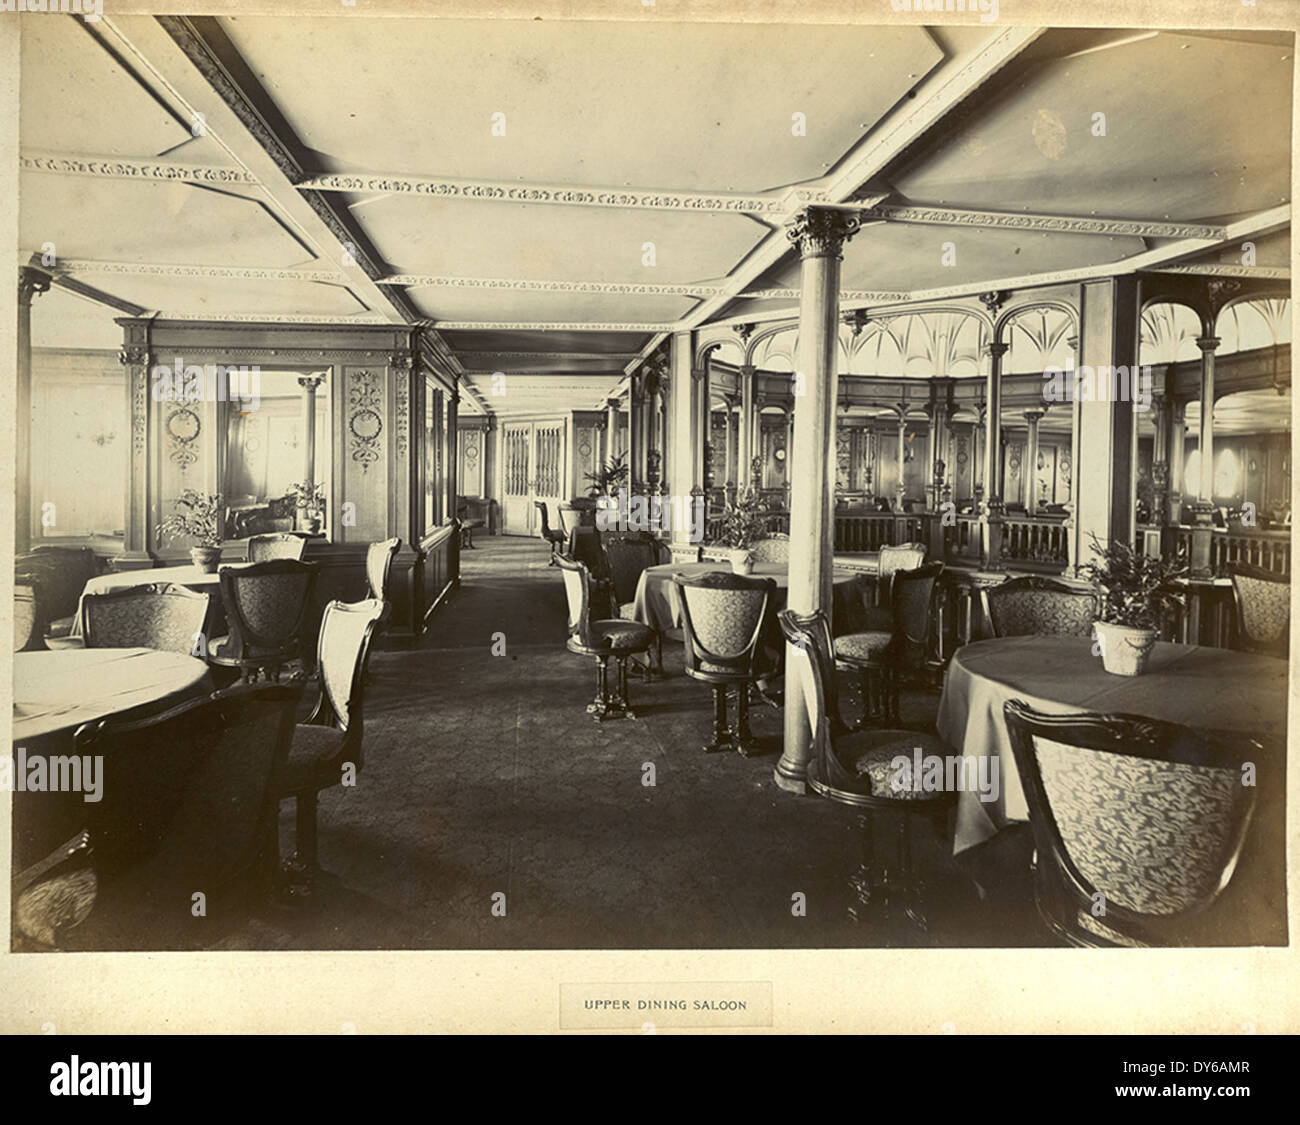 Upper dining saloon Stock Photo - Alamy